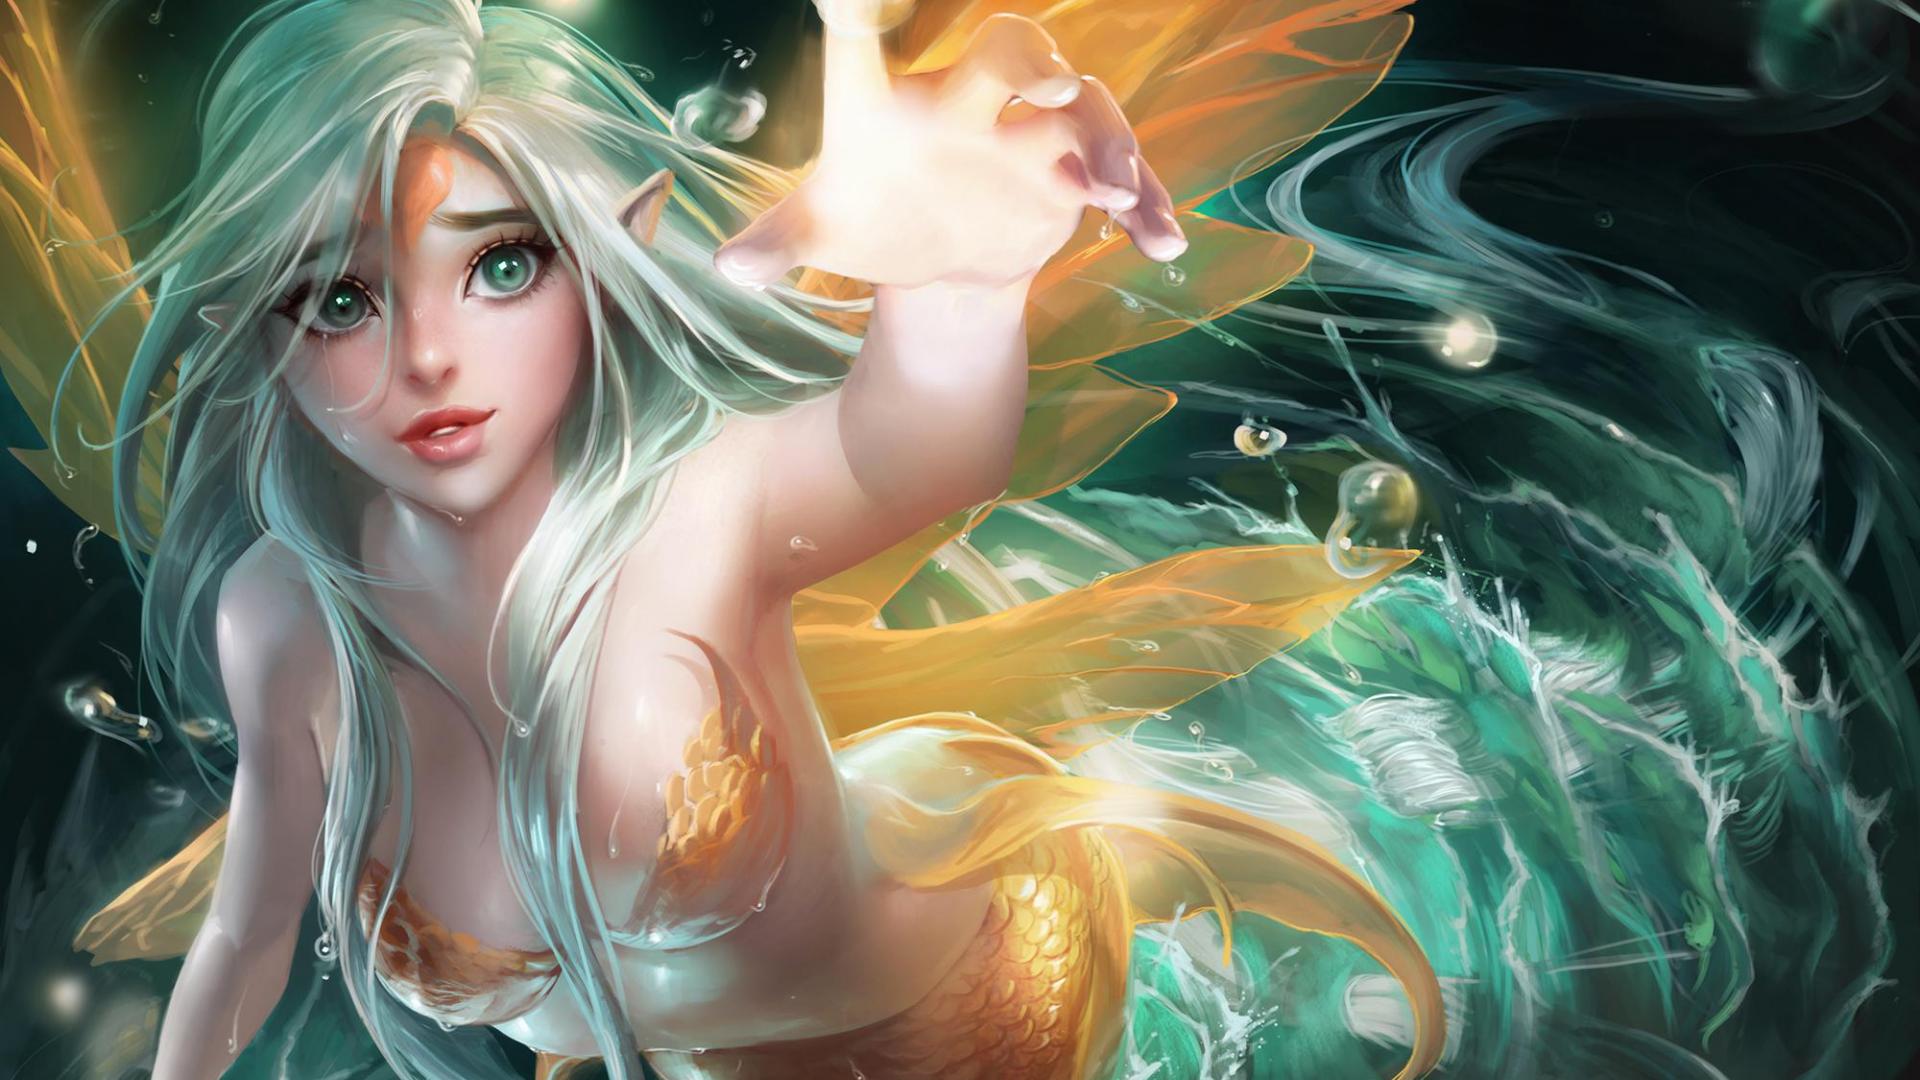 Mermaid Photos  Wallpaper, High Definition, High Quality, Widescreen